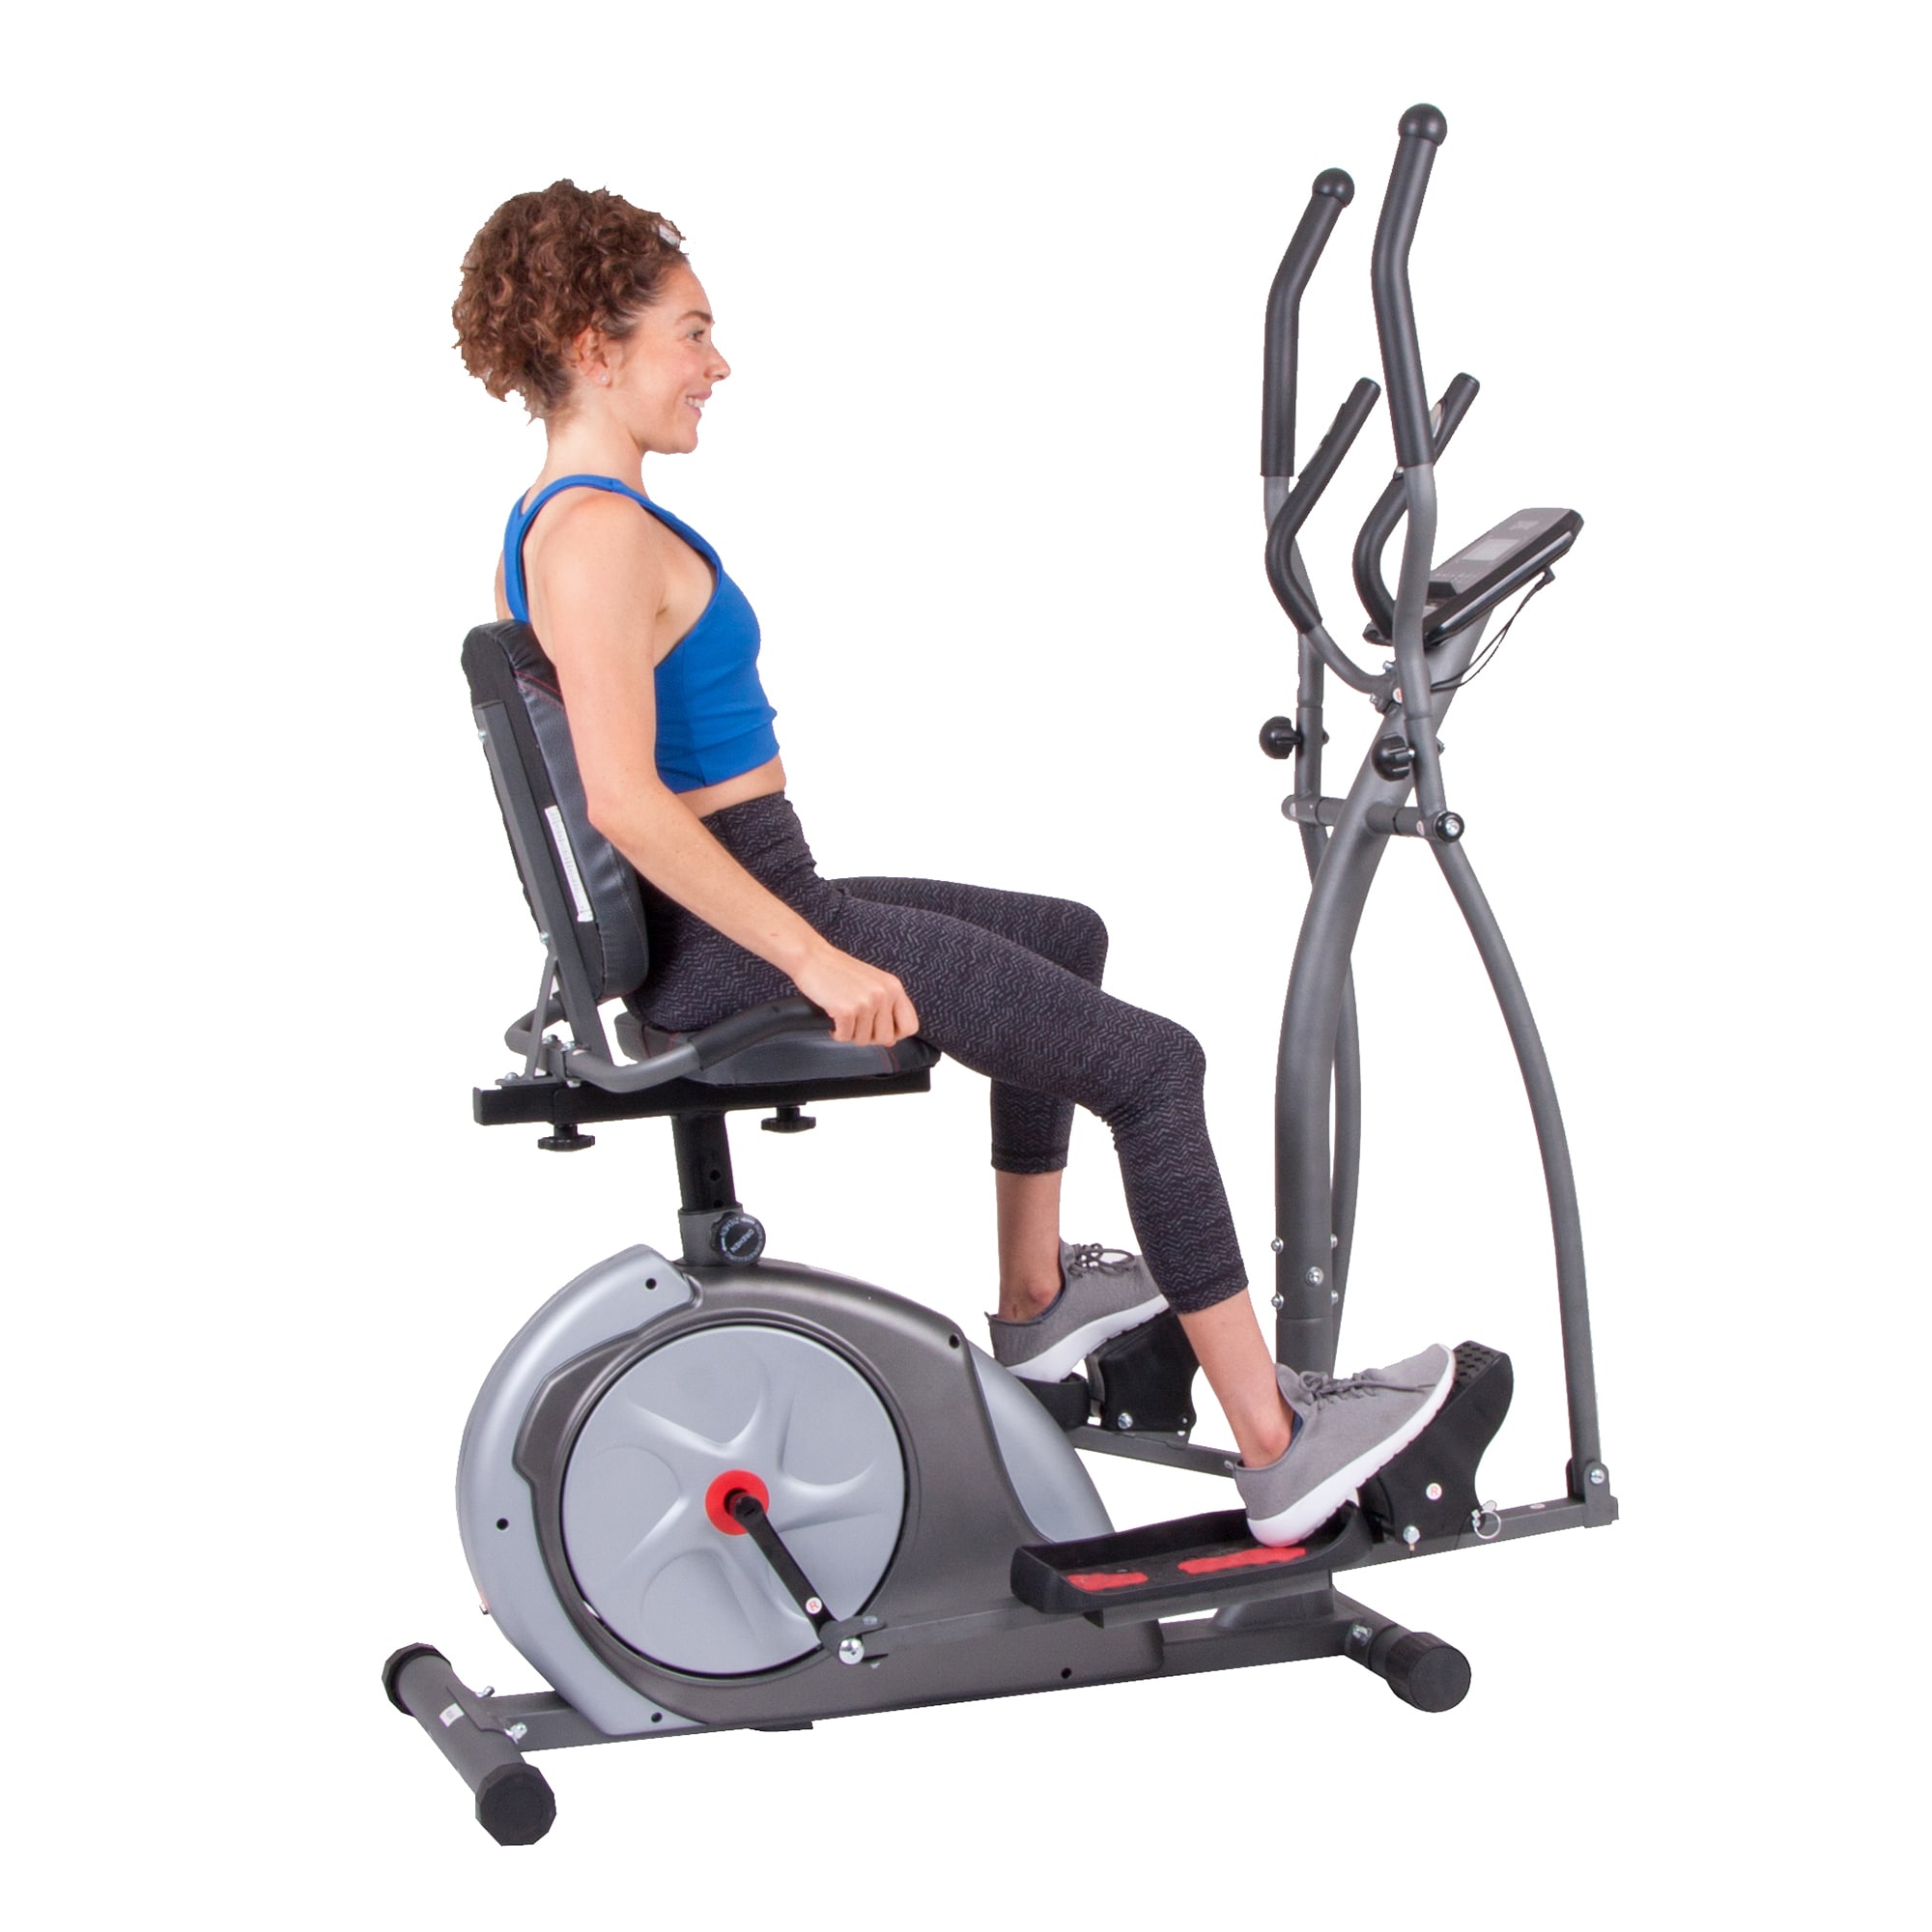 Body Flex Sports Body Rider 3-in-1 Trio Trainer Workout Machine, Black,  Gray, Silver, and Red, BRT5800